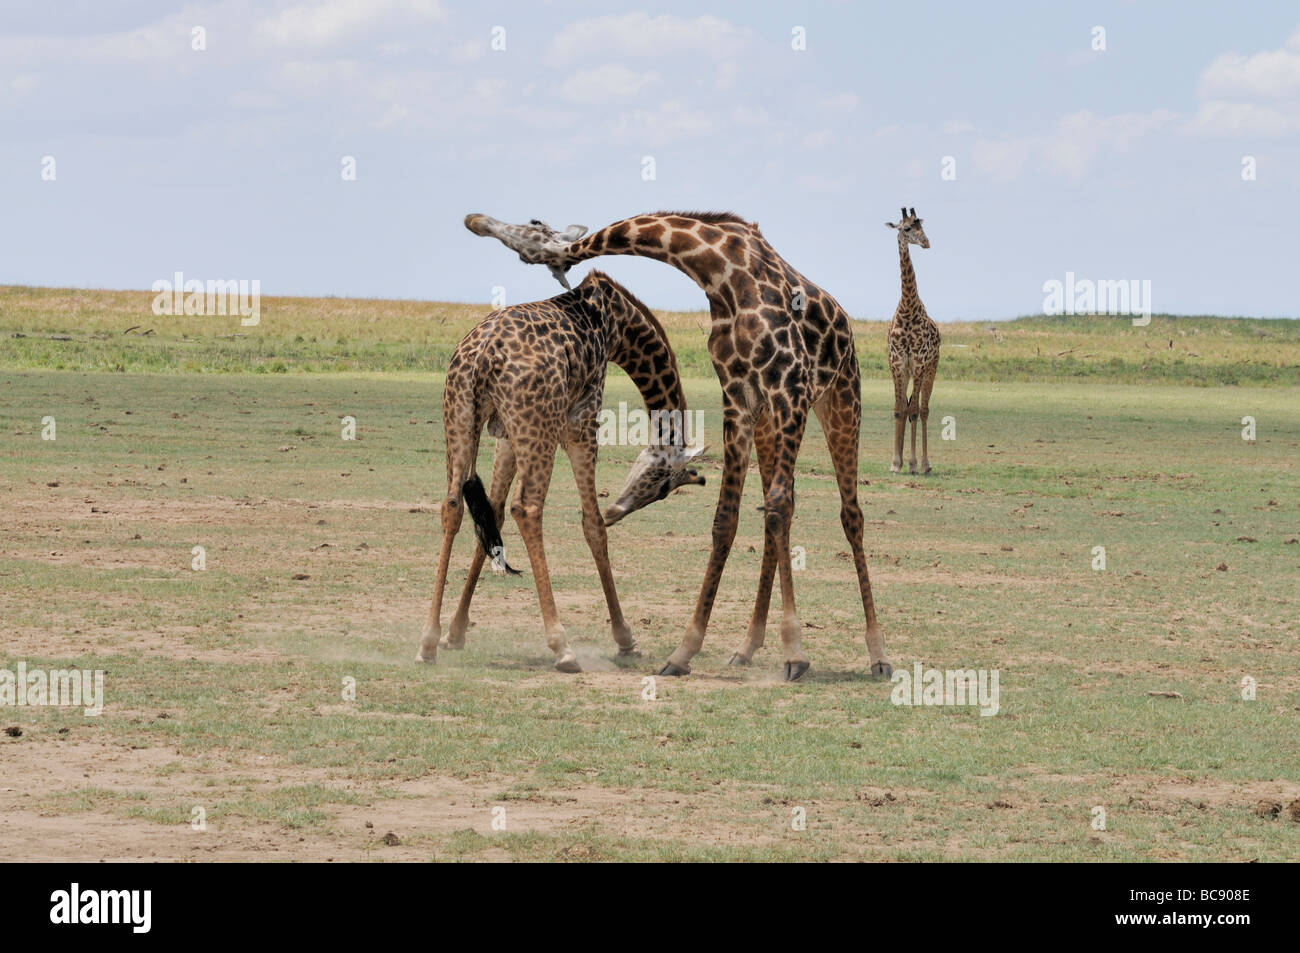 Stock photo of two masai giraffe sparring, Lake Manyara National Park, Tanzania, 2009. Stock Photo